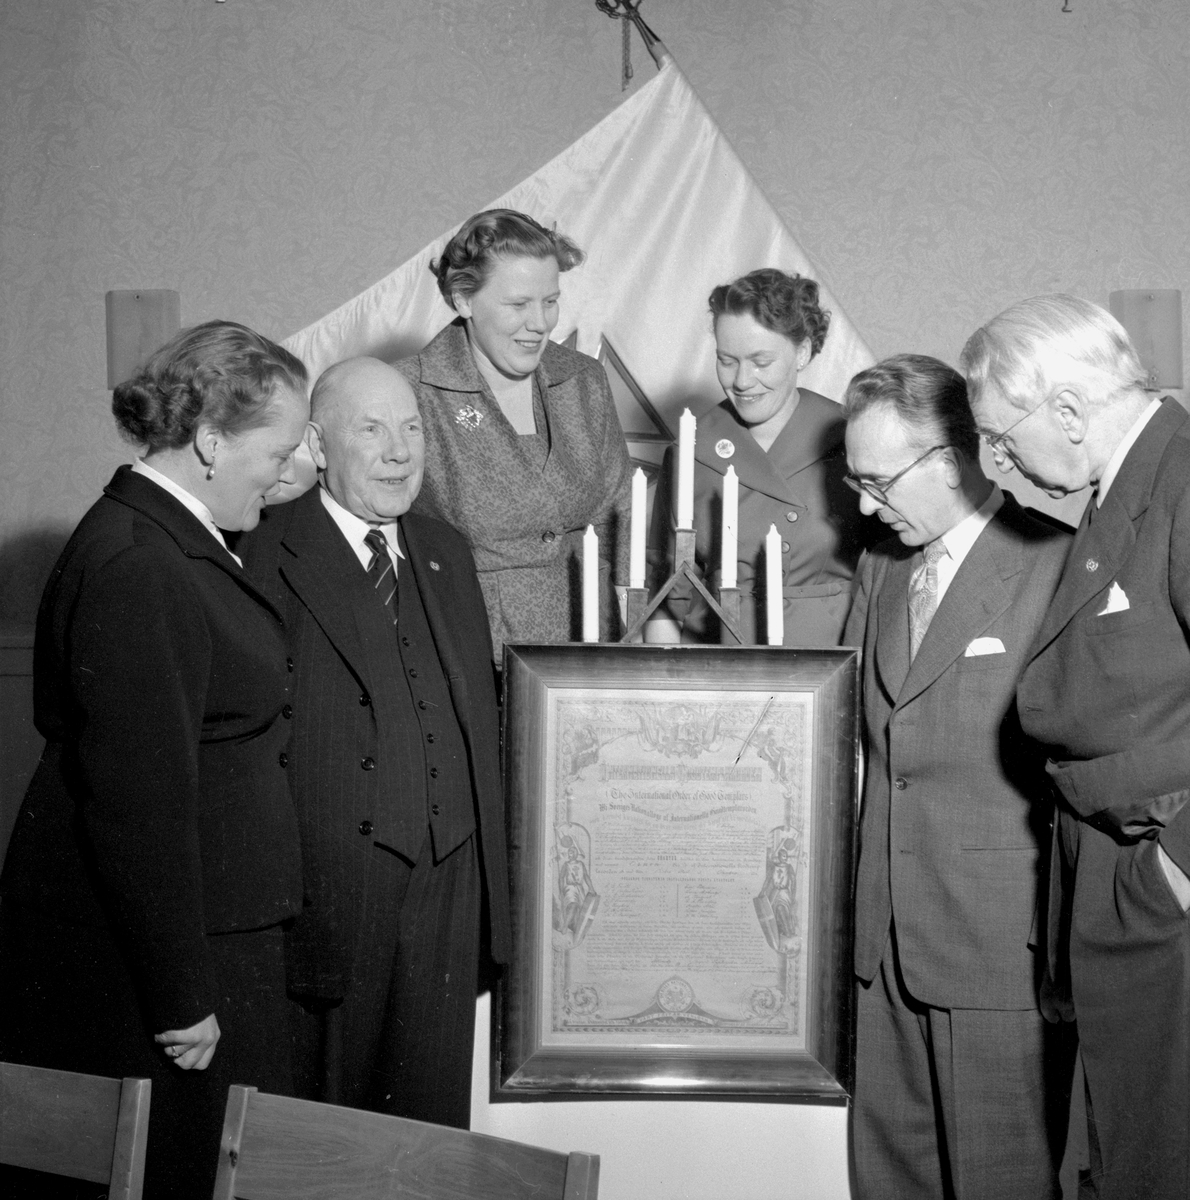 NTO jubileum.
Januari 1956.